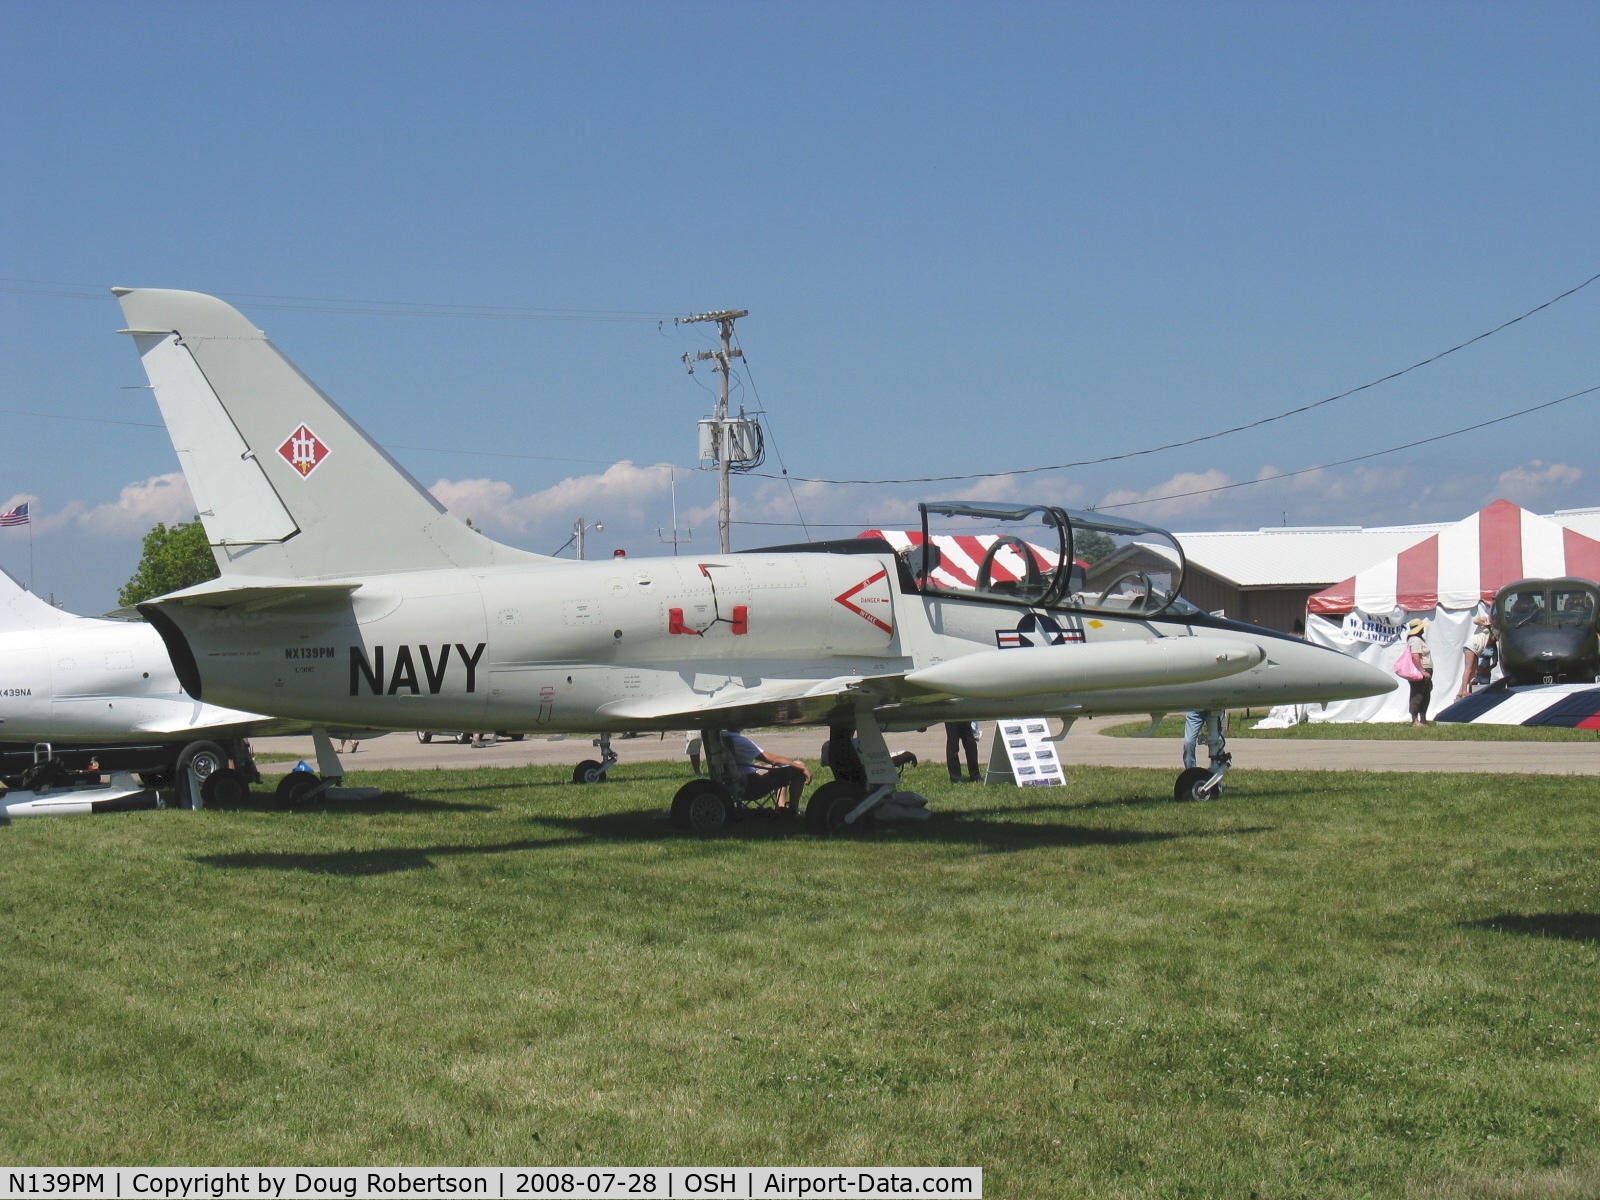 N139PM, 1984 Aero L-39C Albatros C/N 432913, 1984 Aero Vodochody L-39C, Ivchenko AL-25W 3,306 lb st turbojet, basic and advanced trainer